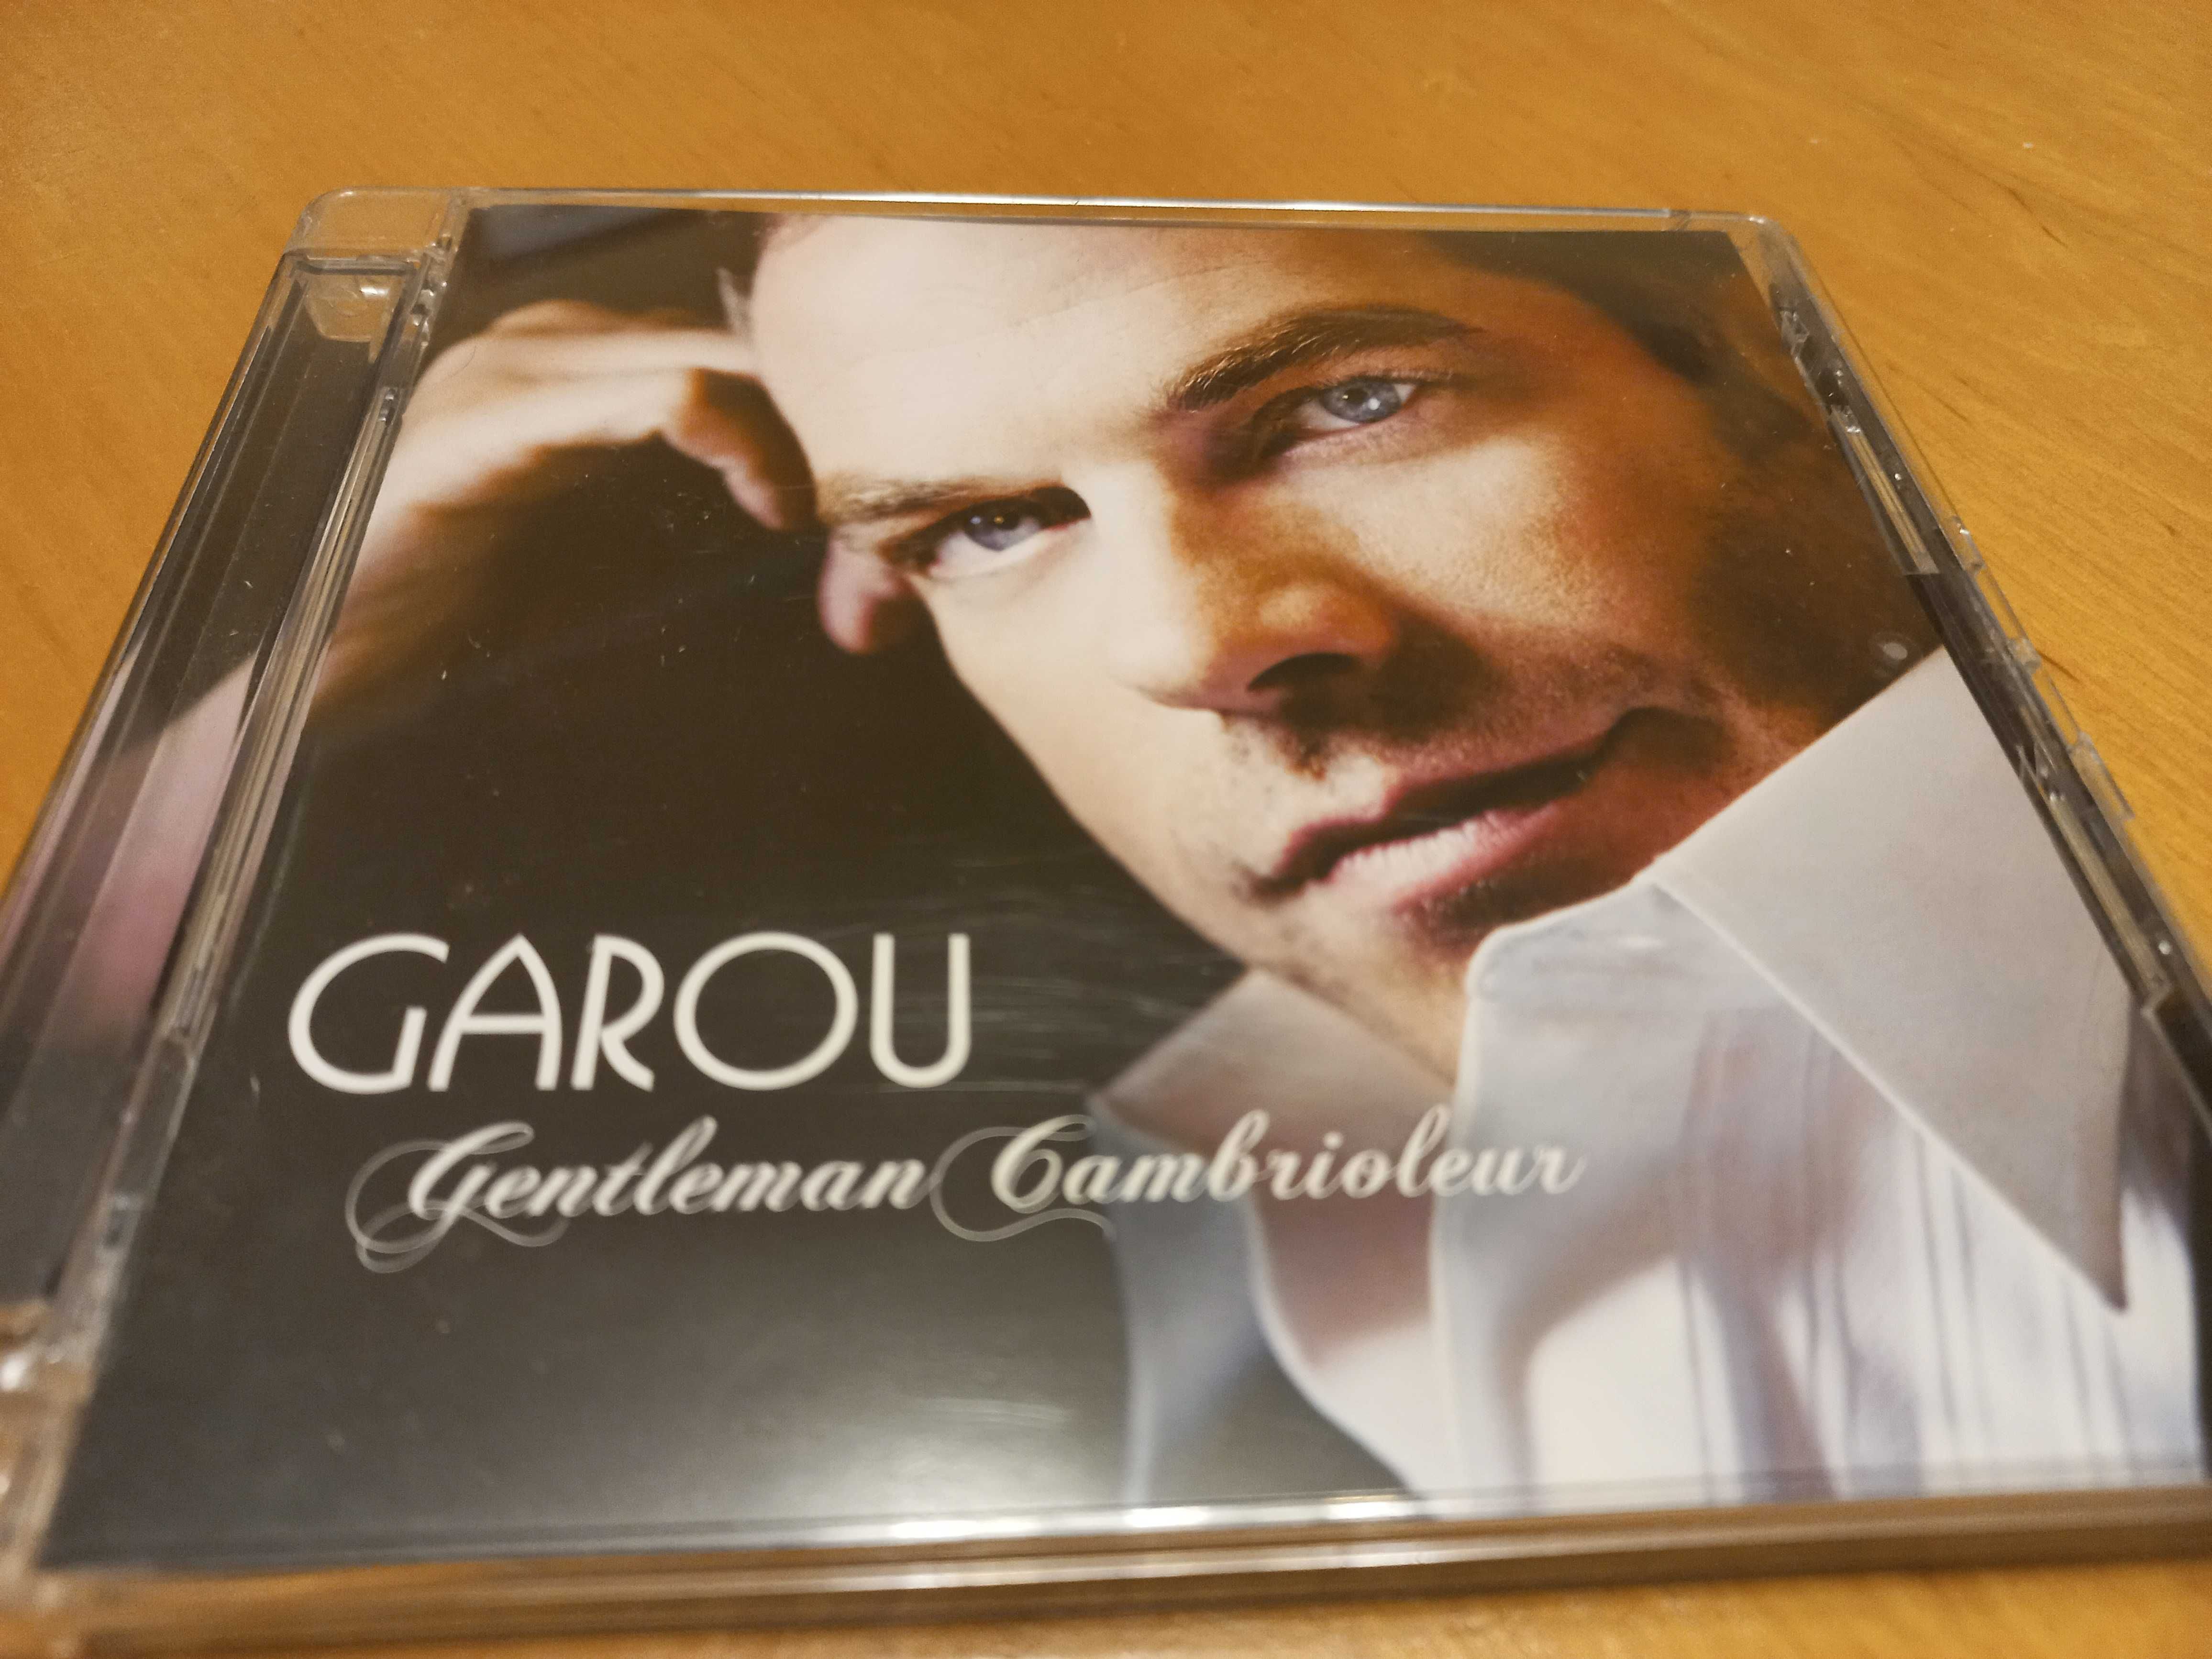 !!! druga płyta CD za 5 zł !!! - Garou, "Gentleman Cambrioleur"